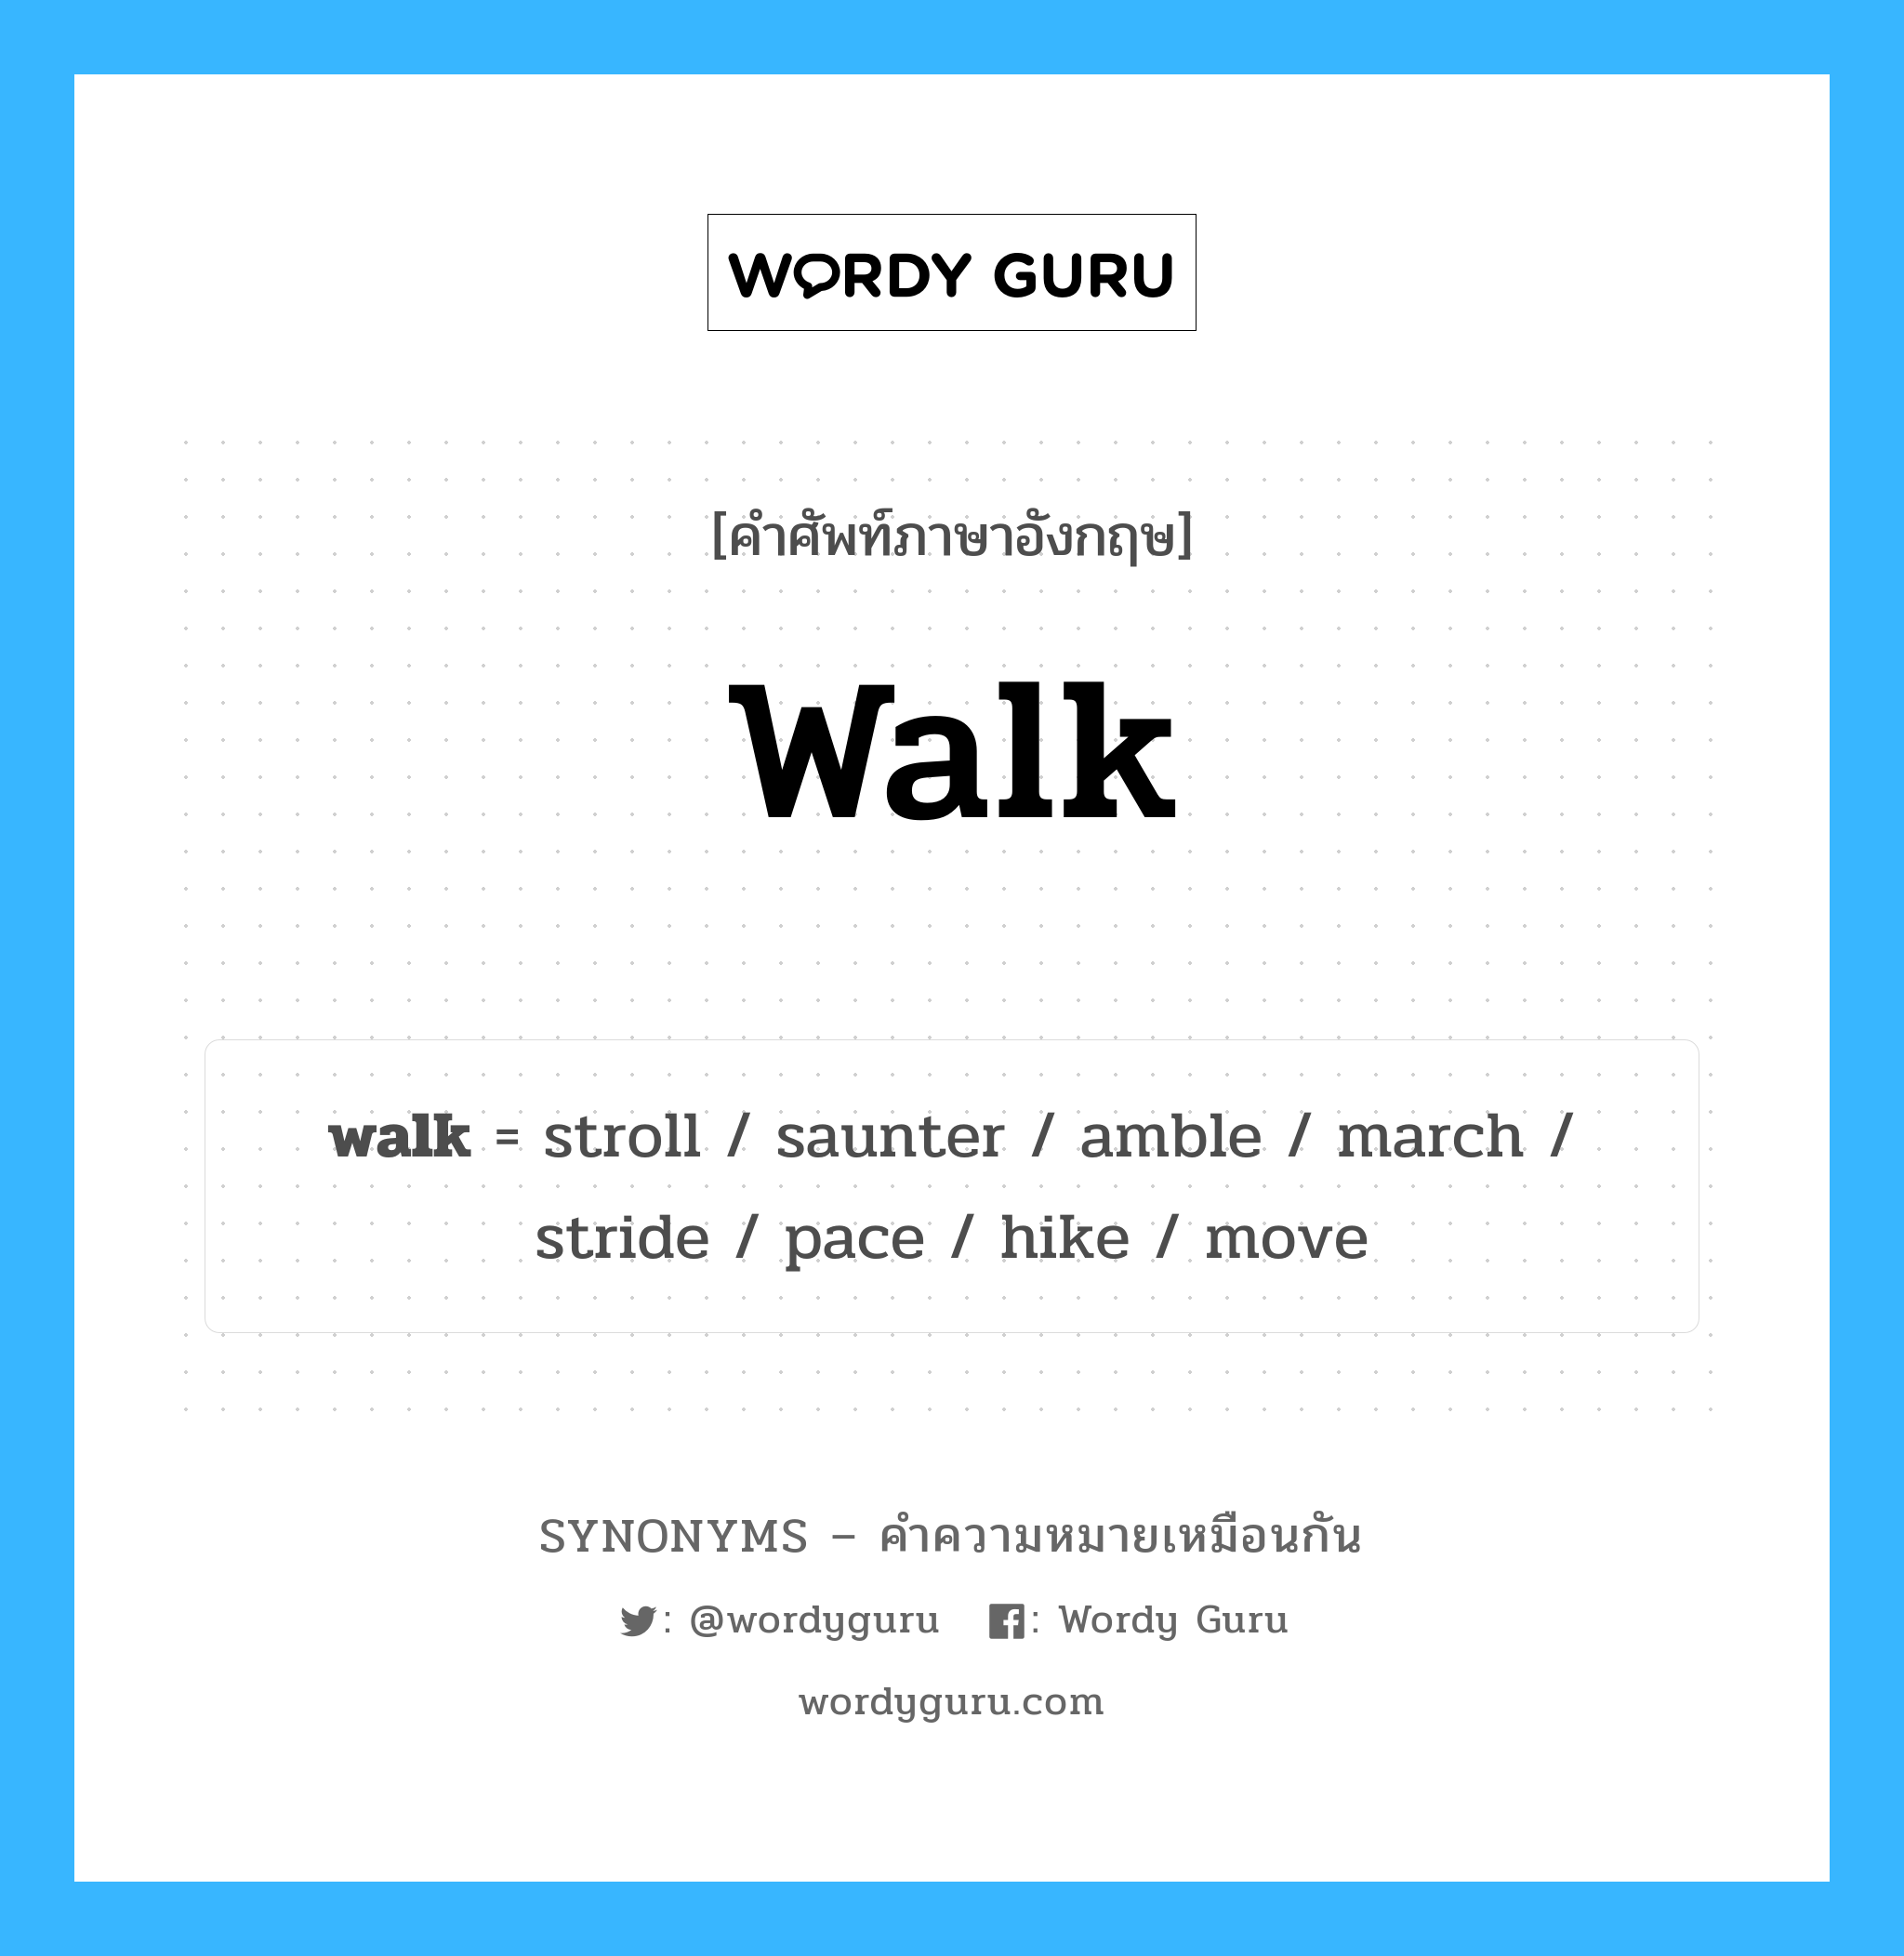 move เป็นหนึ่งใน go และมีคำอื่น ๆ อีกดังนี้, คำศัพท์ภาษาอังกฤษ move ความหมายคล้ายกันกับ walk แปลว่า ย้าย หมวด walk